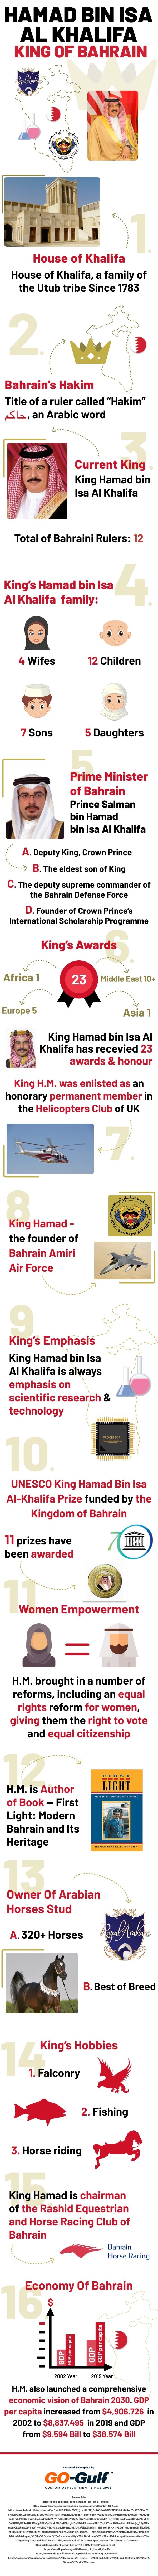 Facts about King Hamad bin Isa Al Khalifa of Bahrain [Infographic]